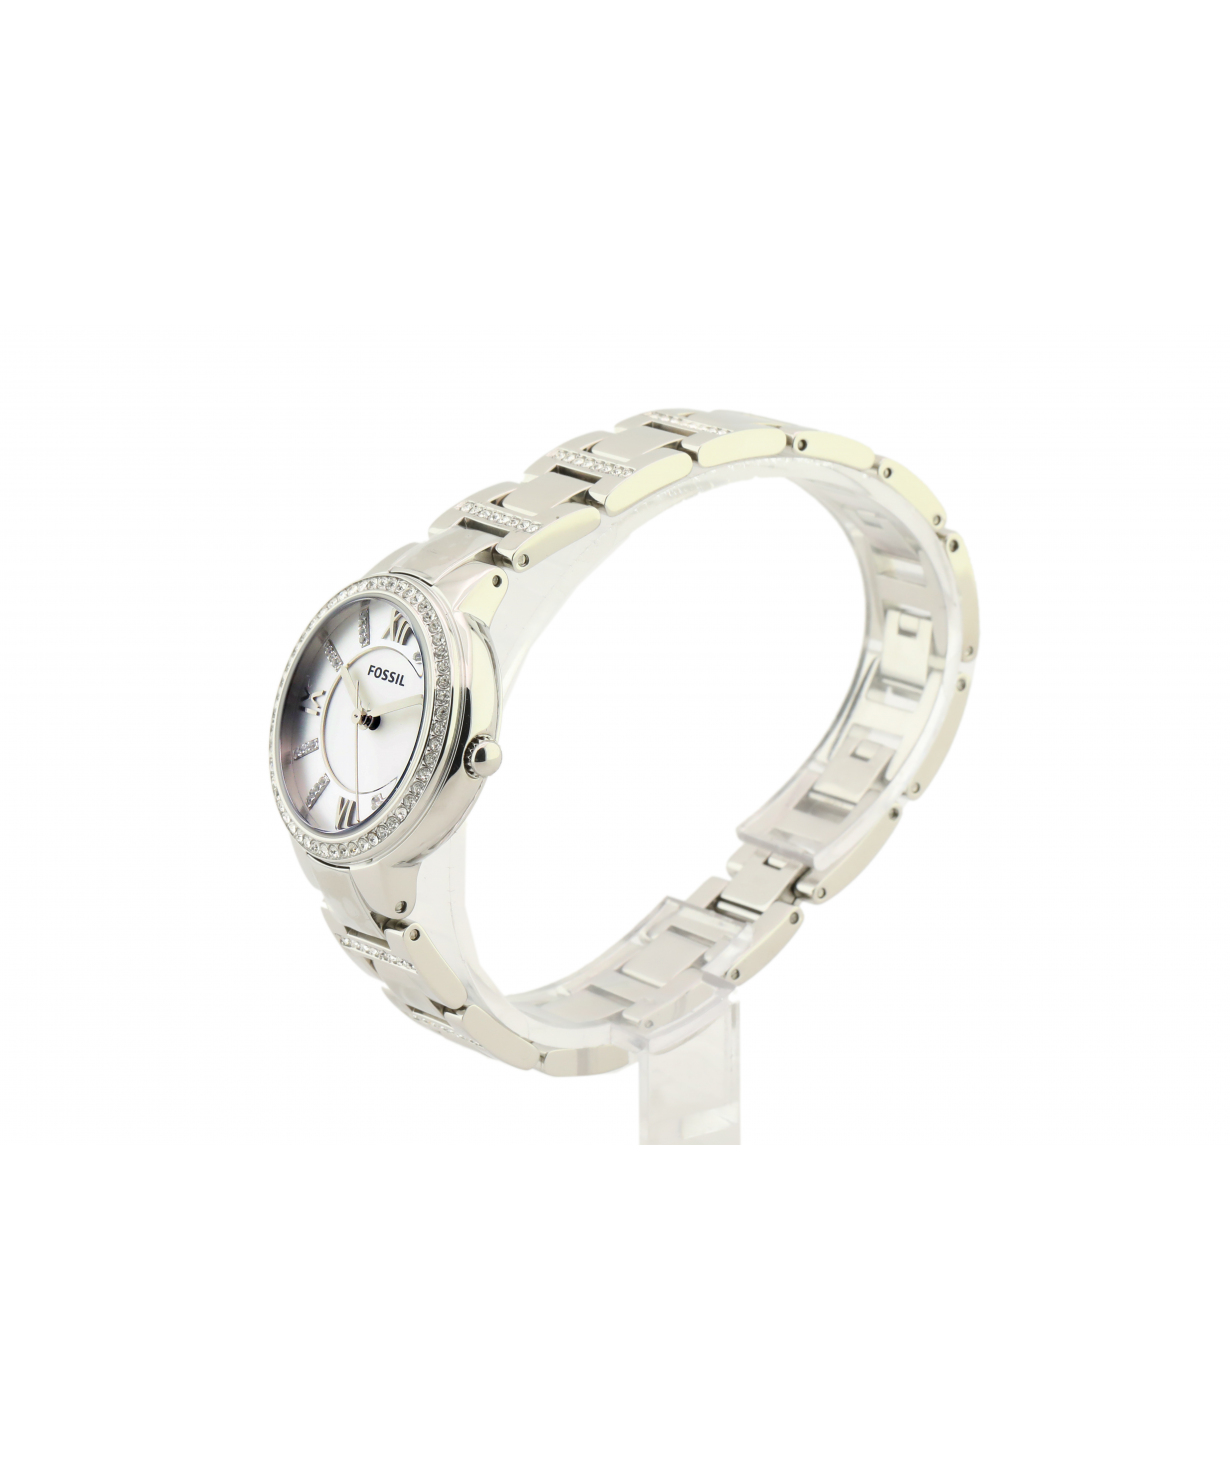 Wrist watch `Fossil` ES3282